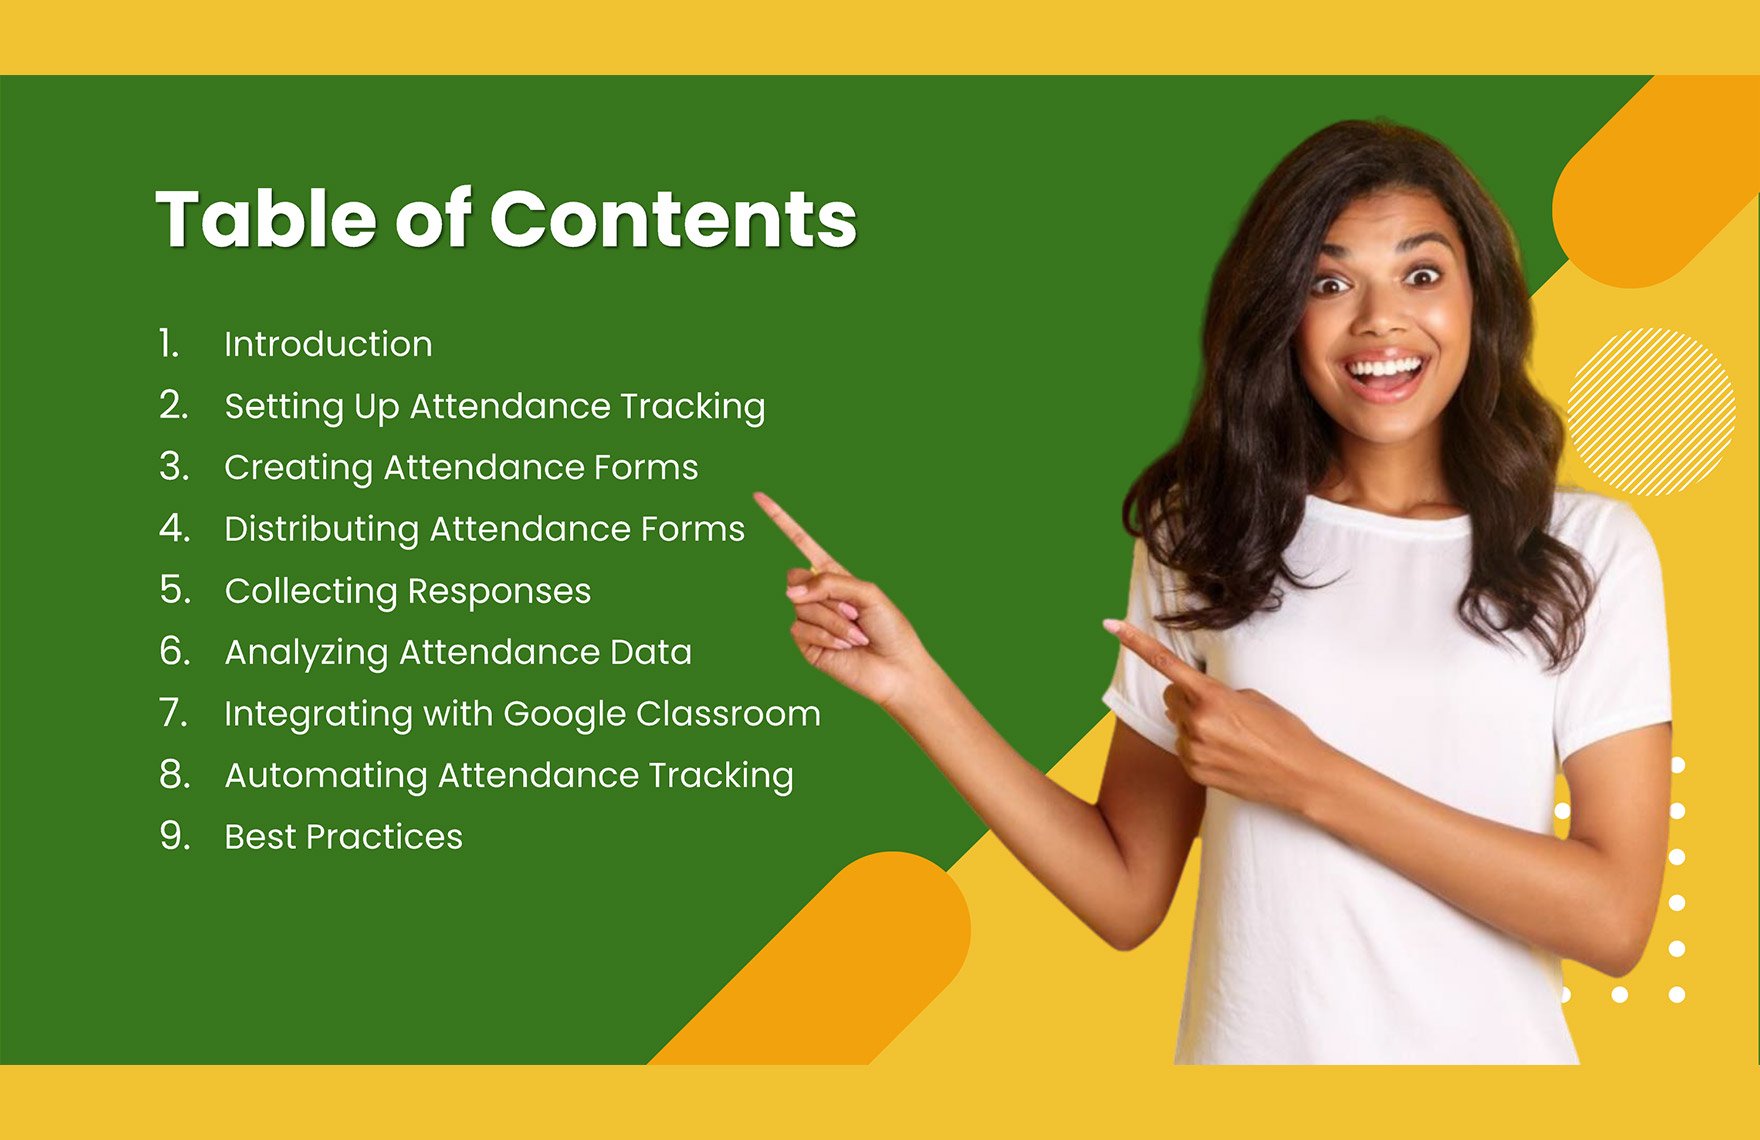 Track Google Classroom Attendance Template